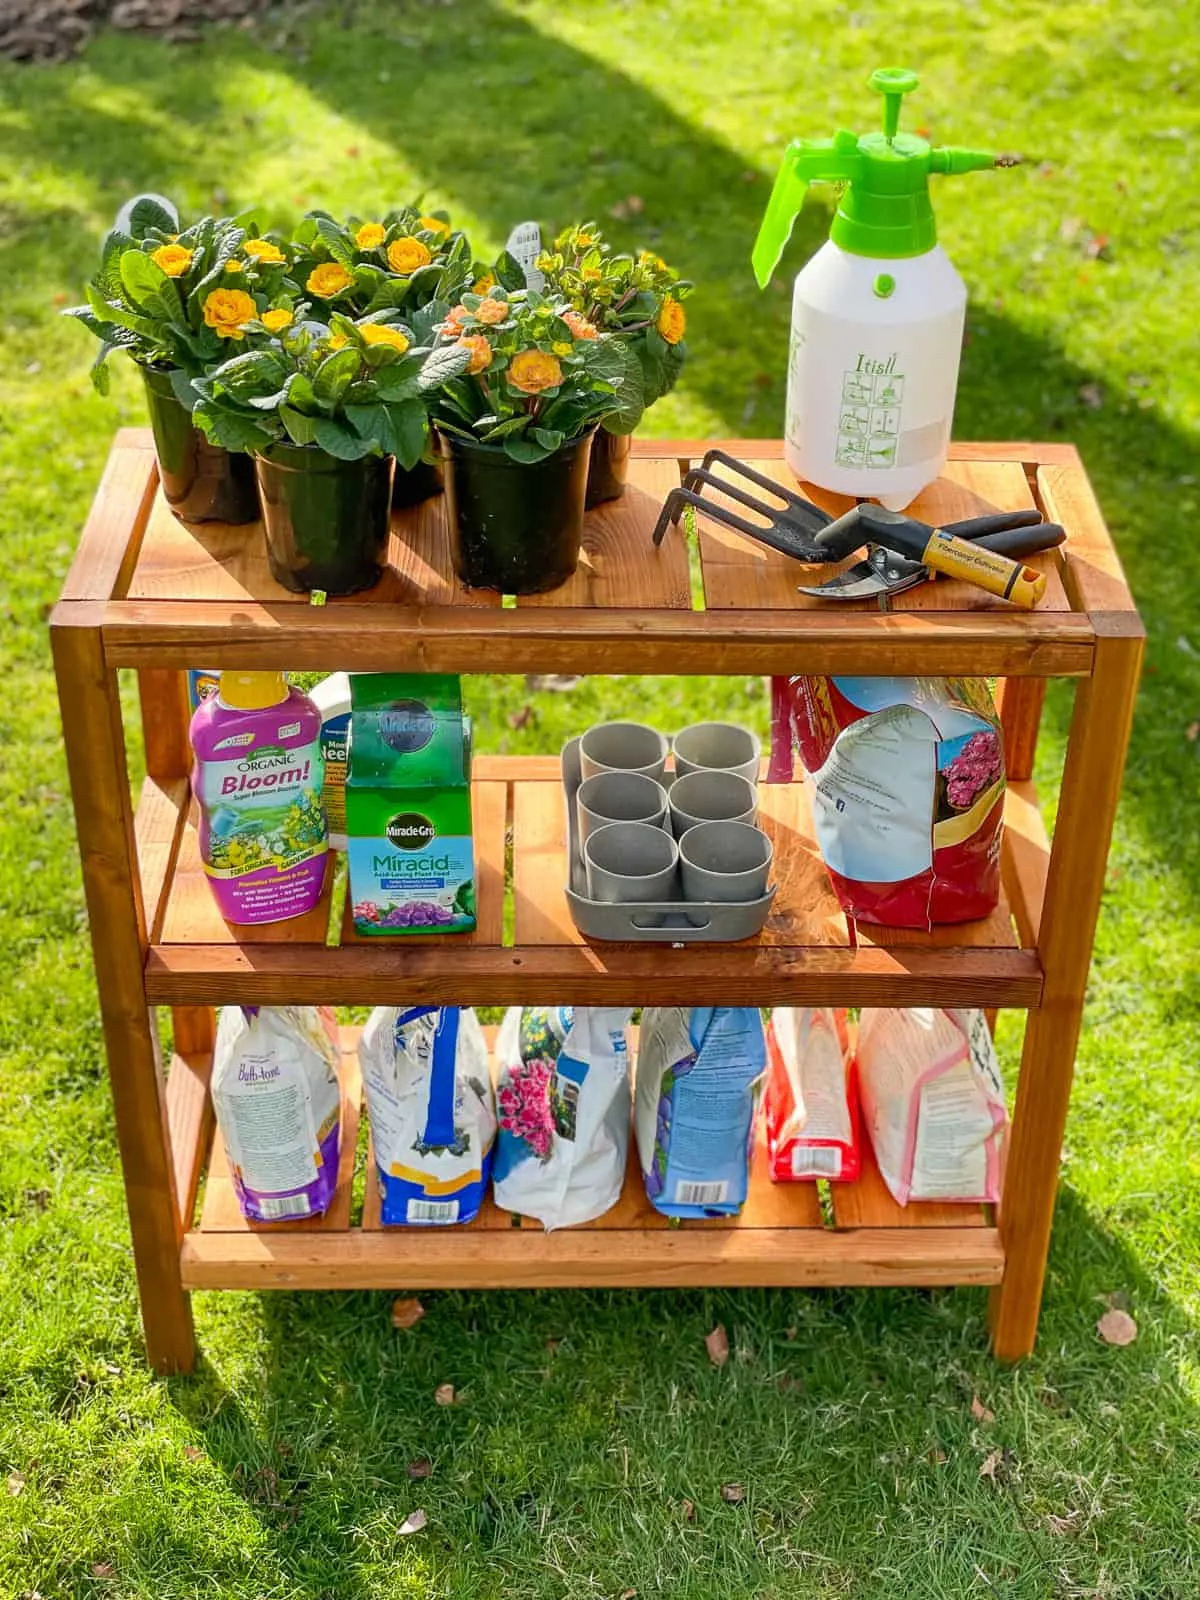 DIY outdoor shelves with gardening supplies